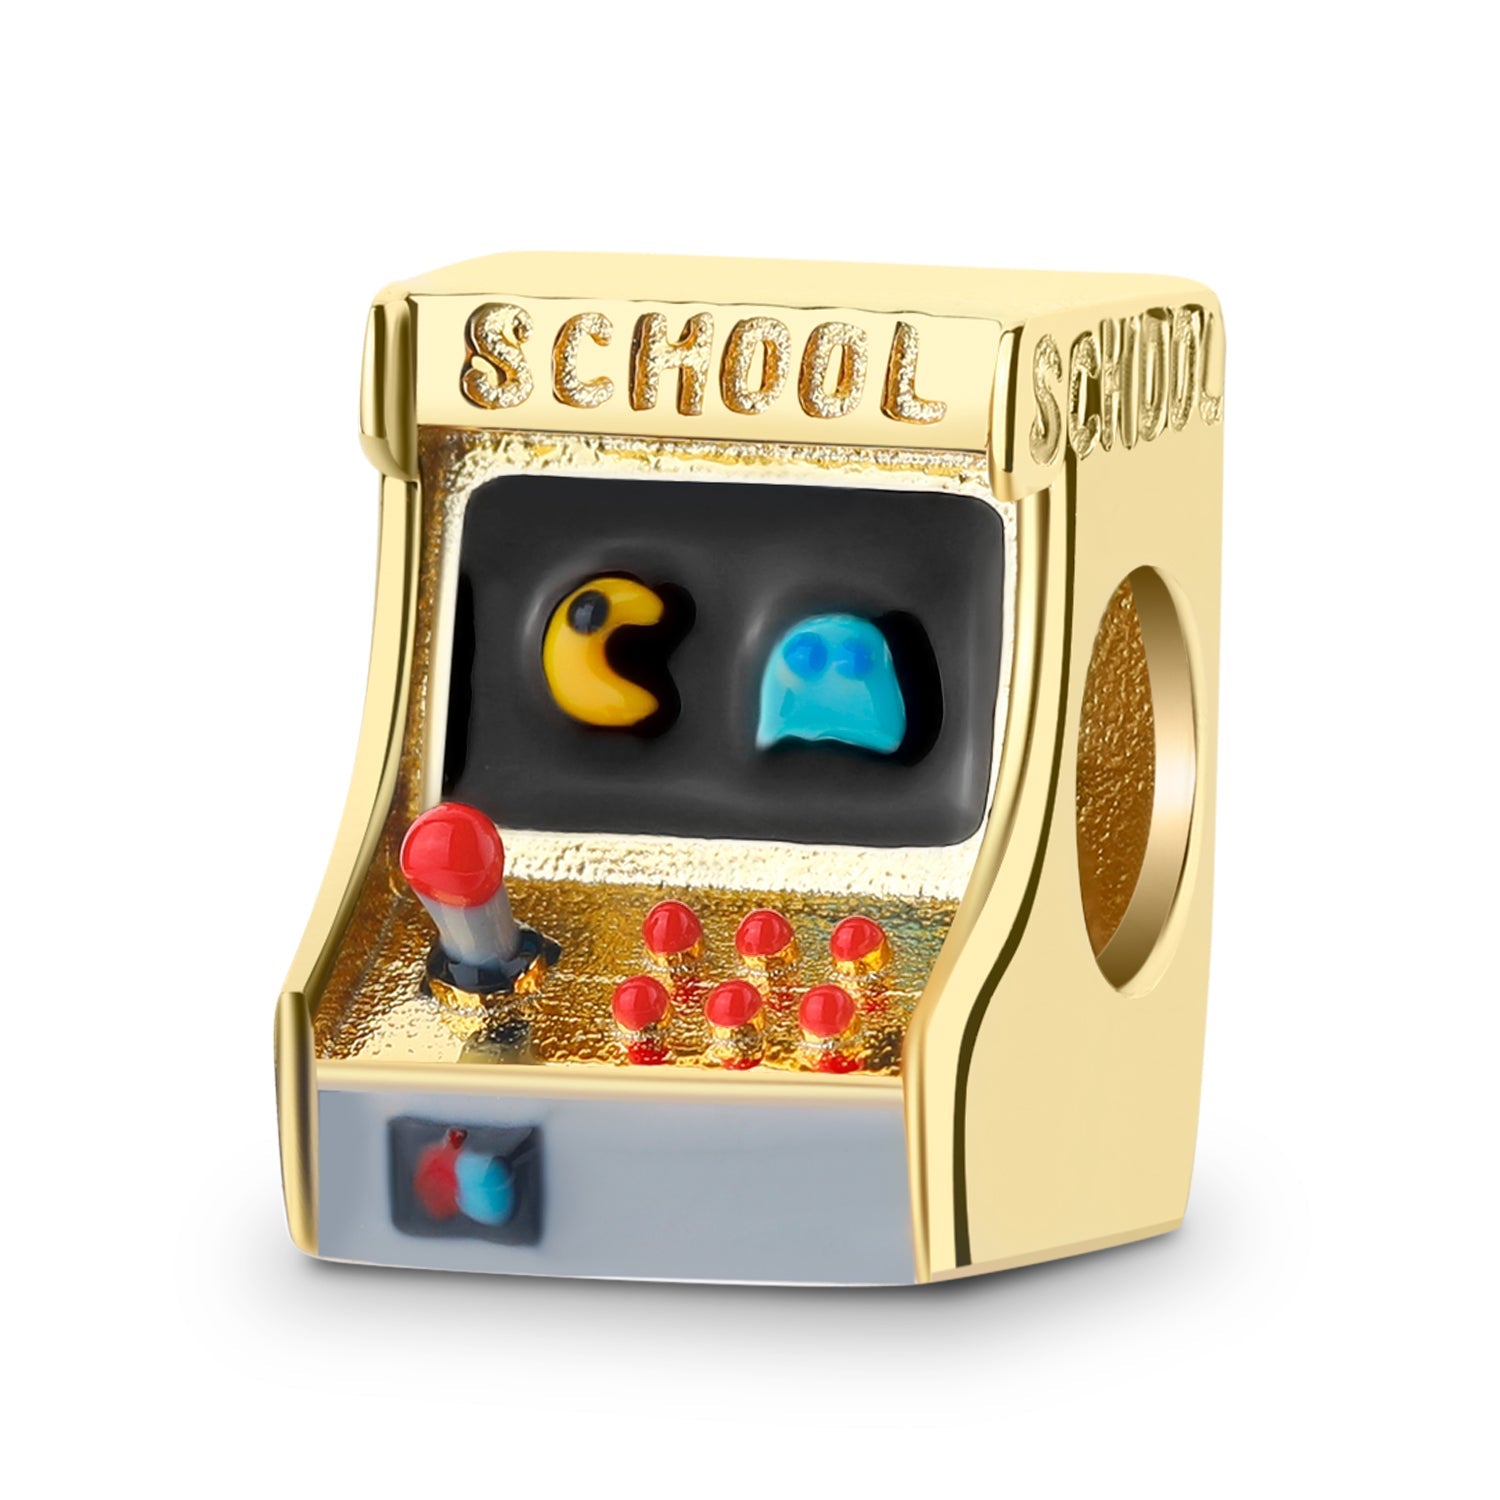 Golden Pacman slot machine